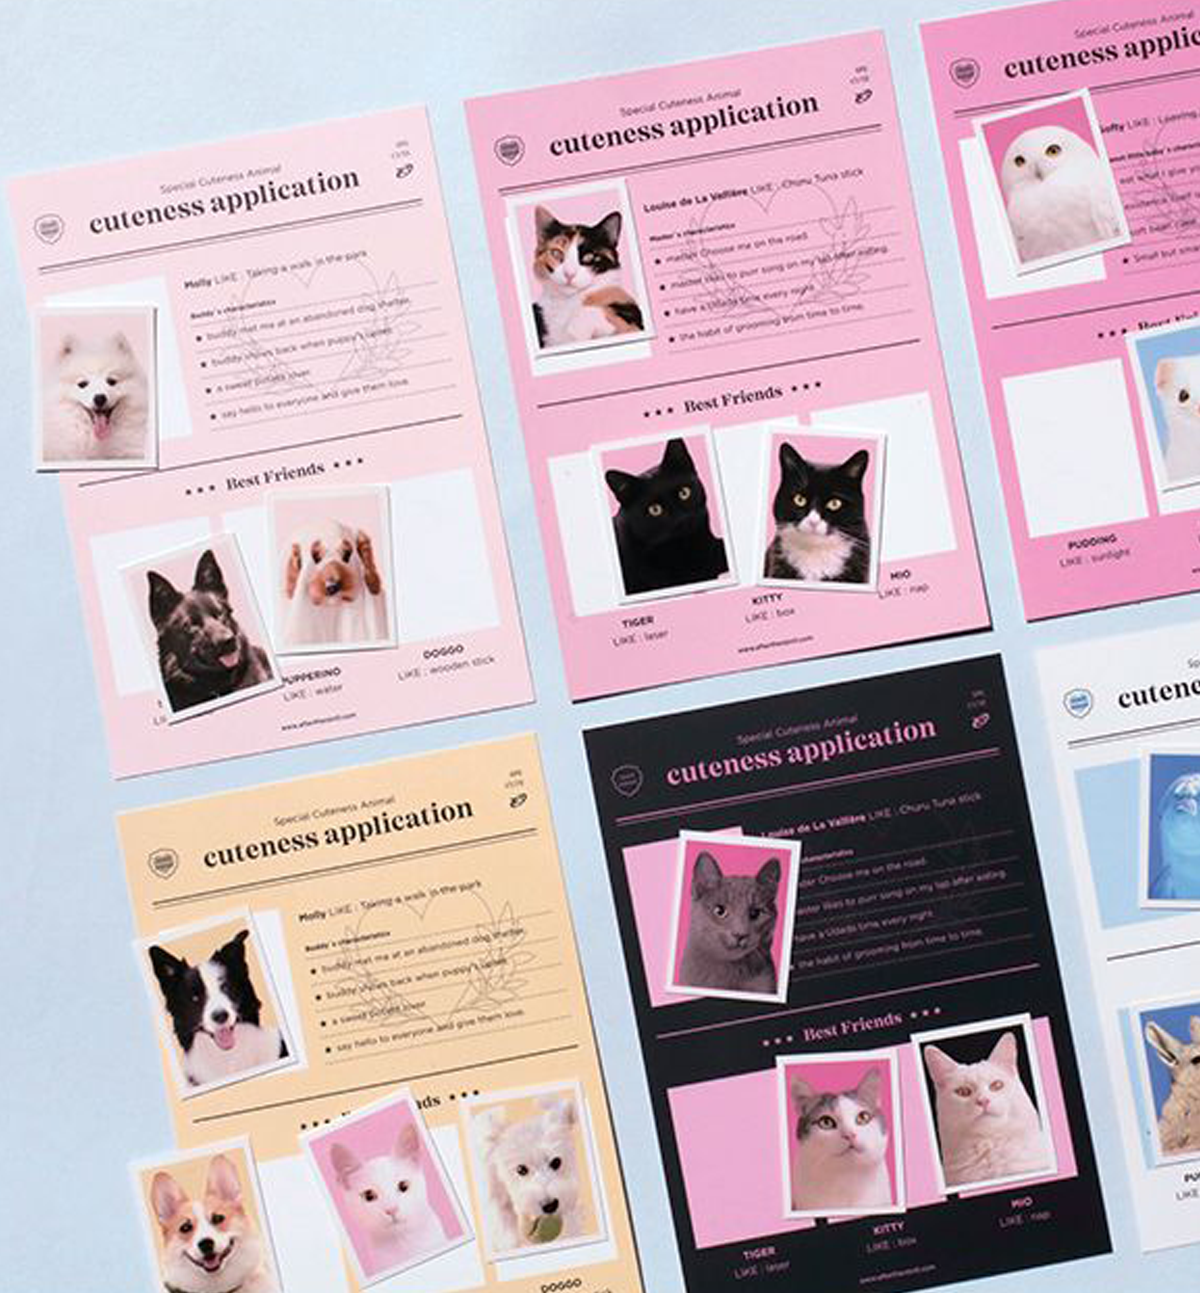 Animal Lover Sticker Pack